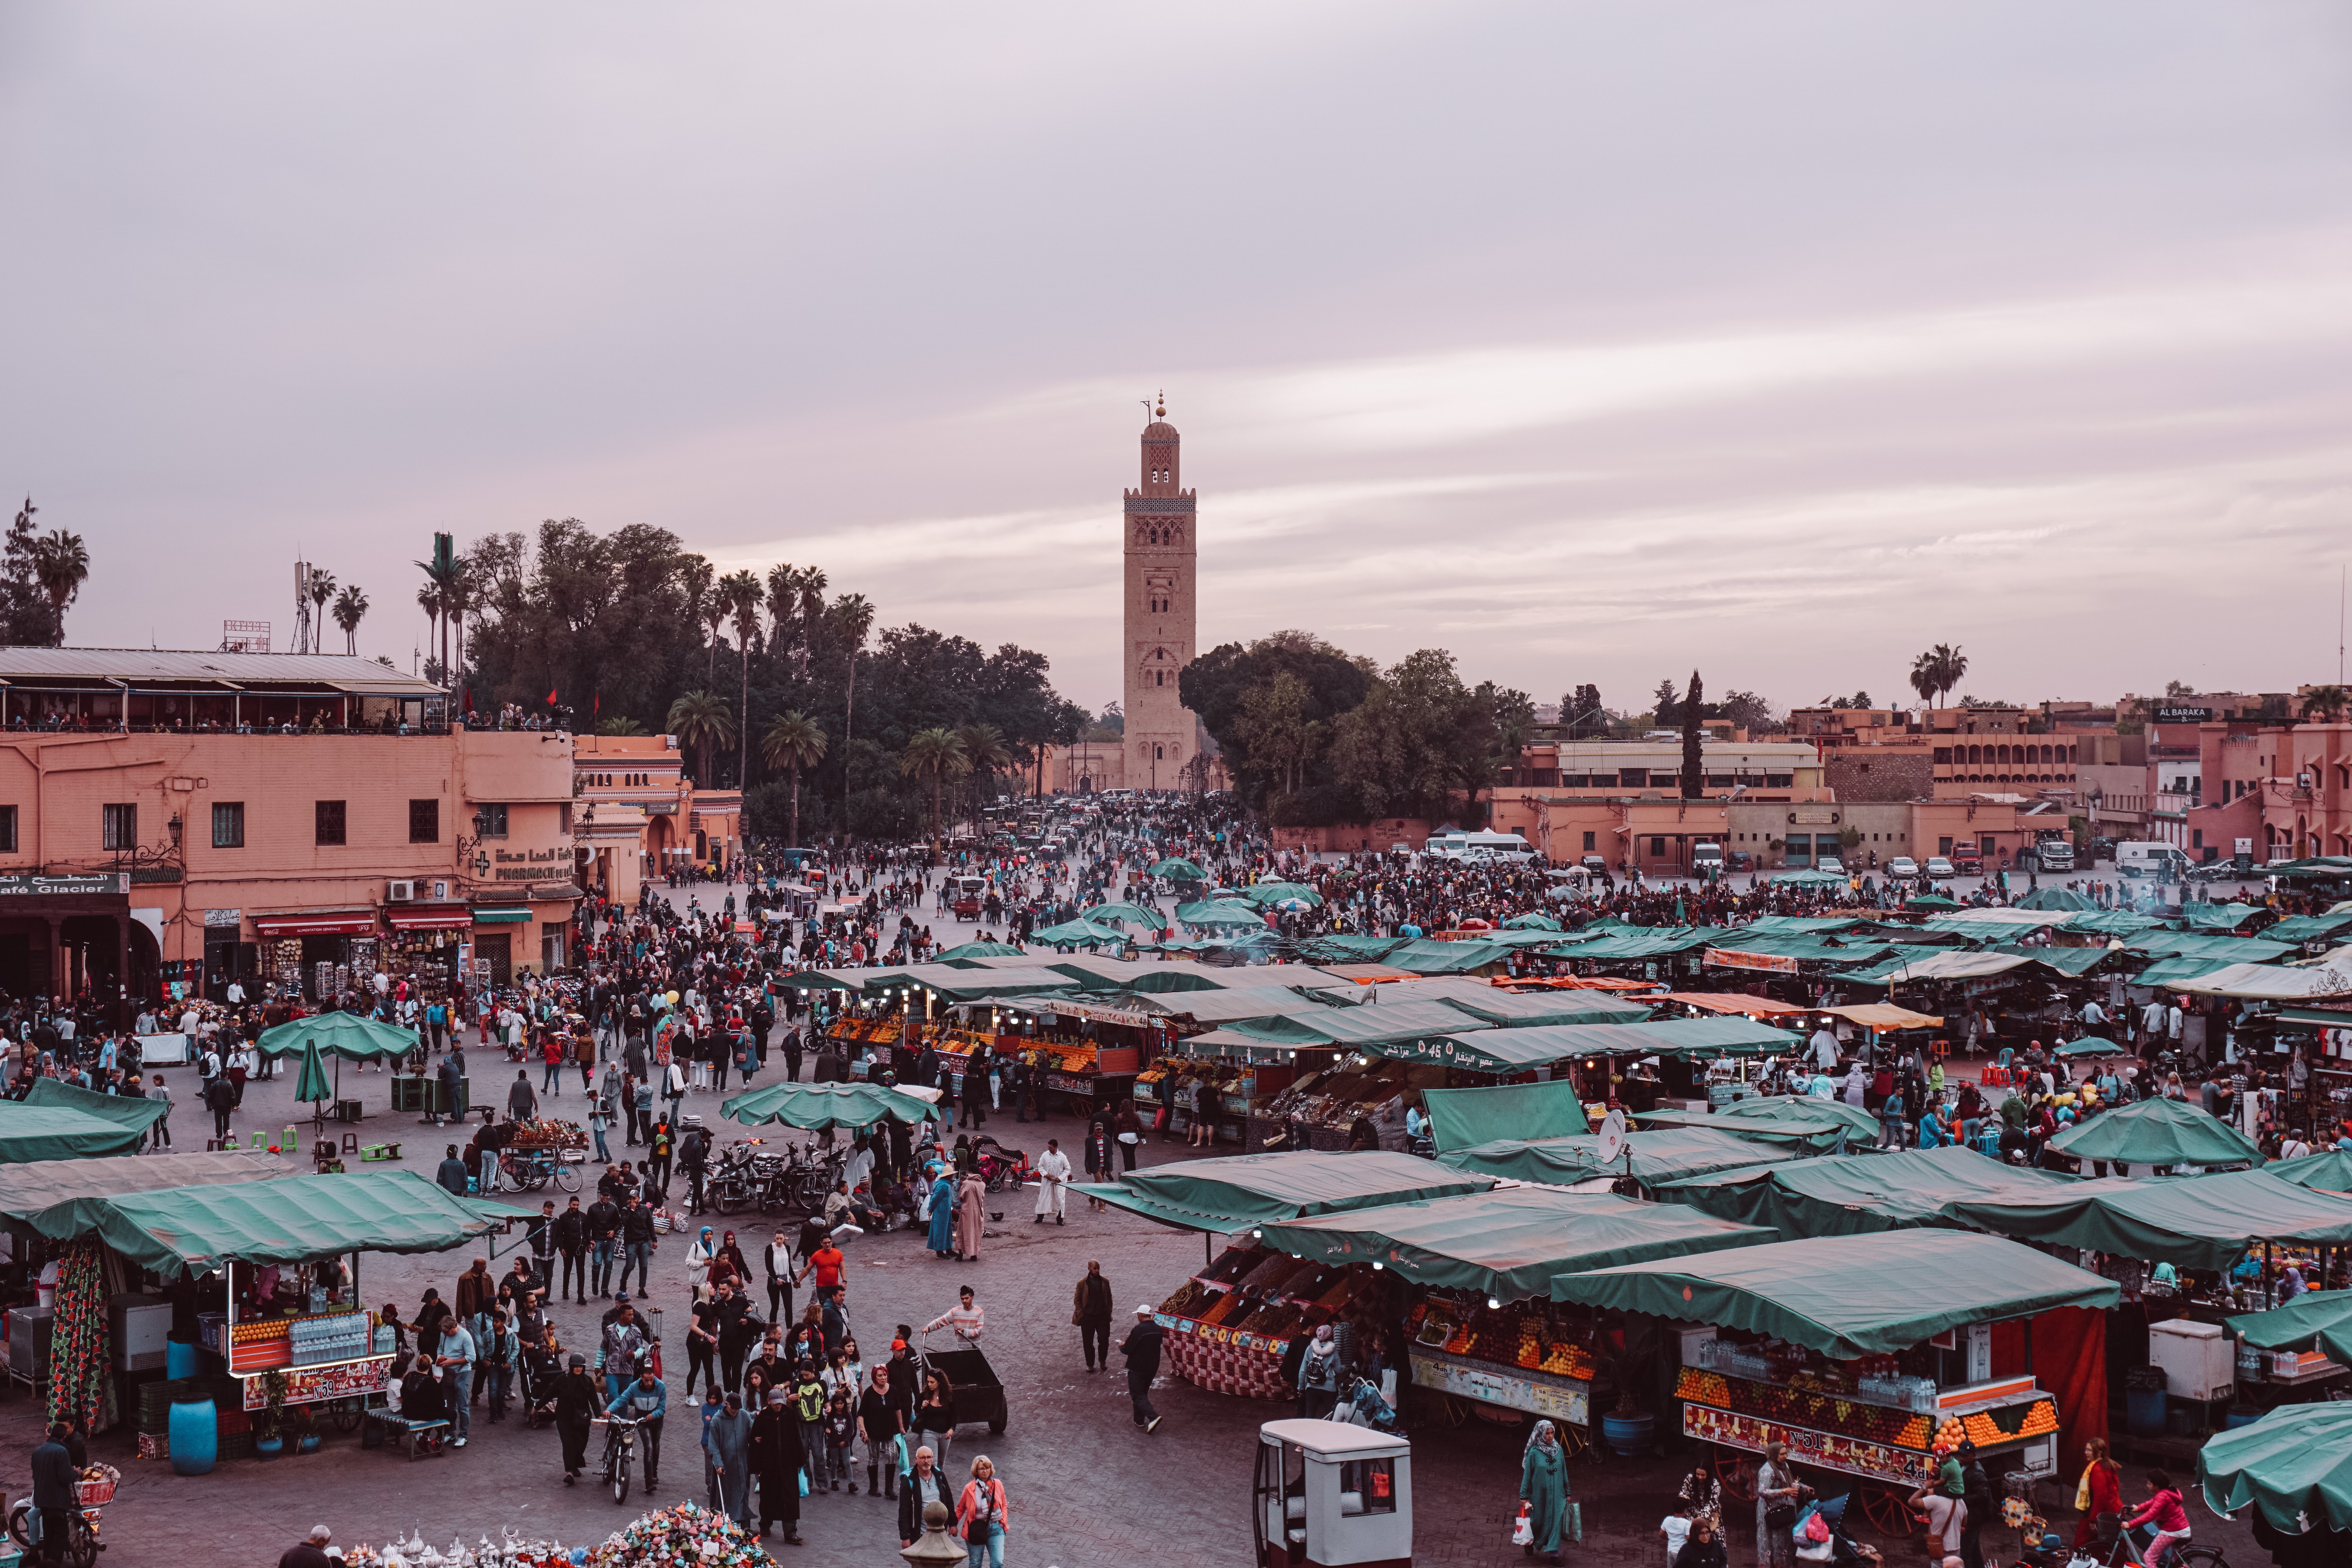 Jamaa El Fna - Marrakech 2020

